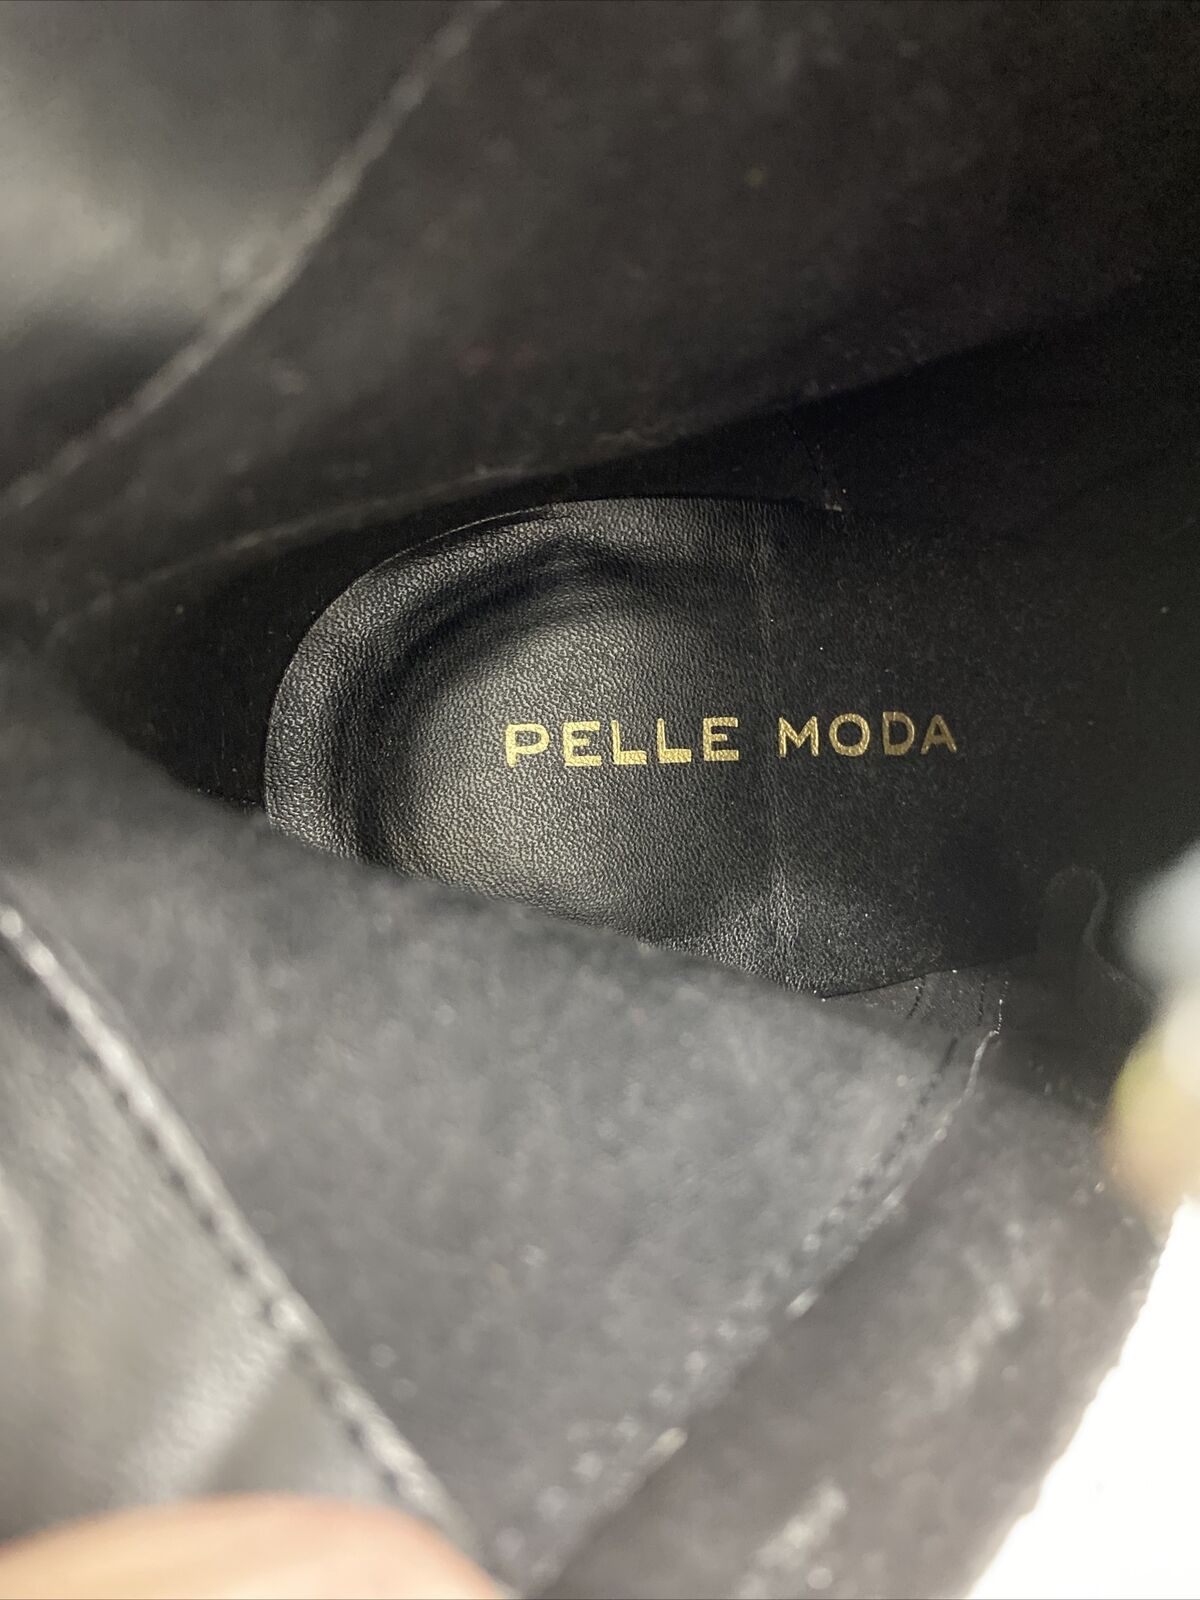 Pelle Moda YESNIA-SU Black Suede Side Boots Women's Siz - beyond exchange